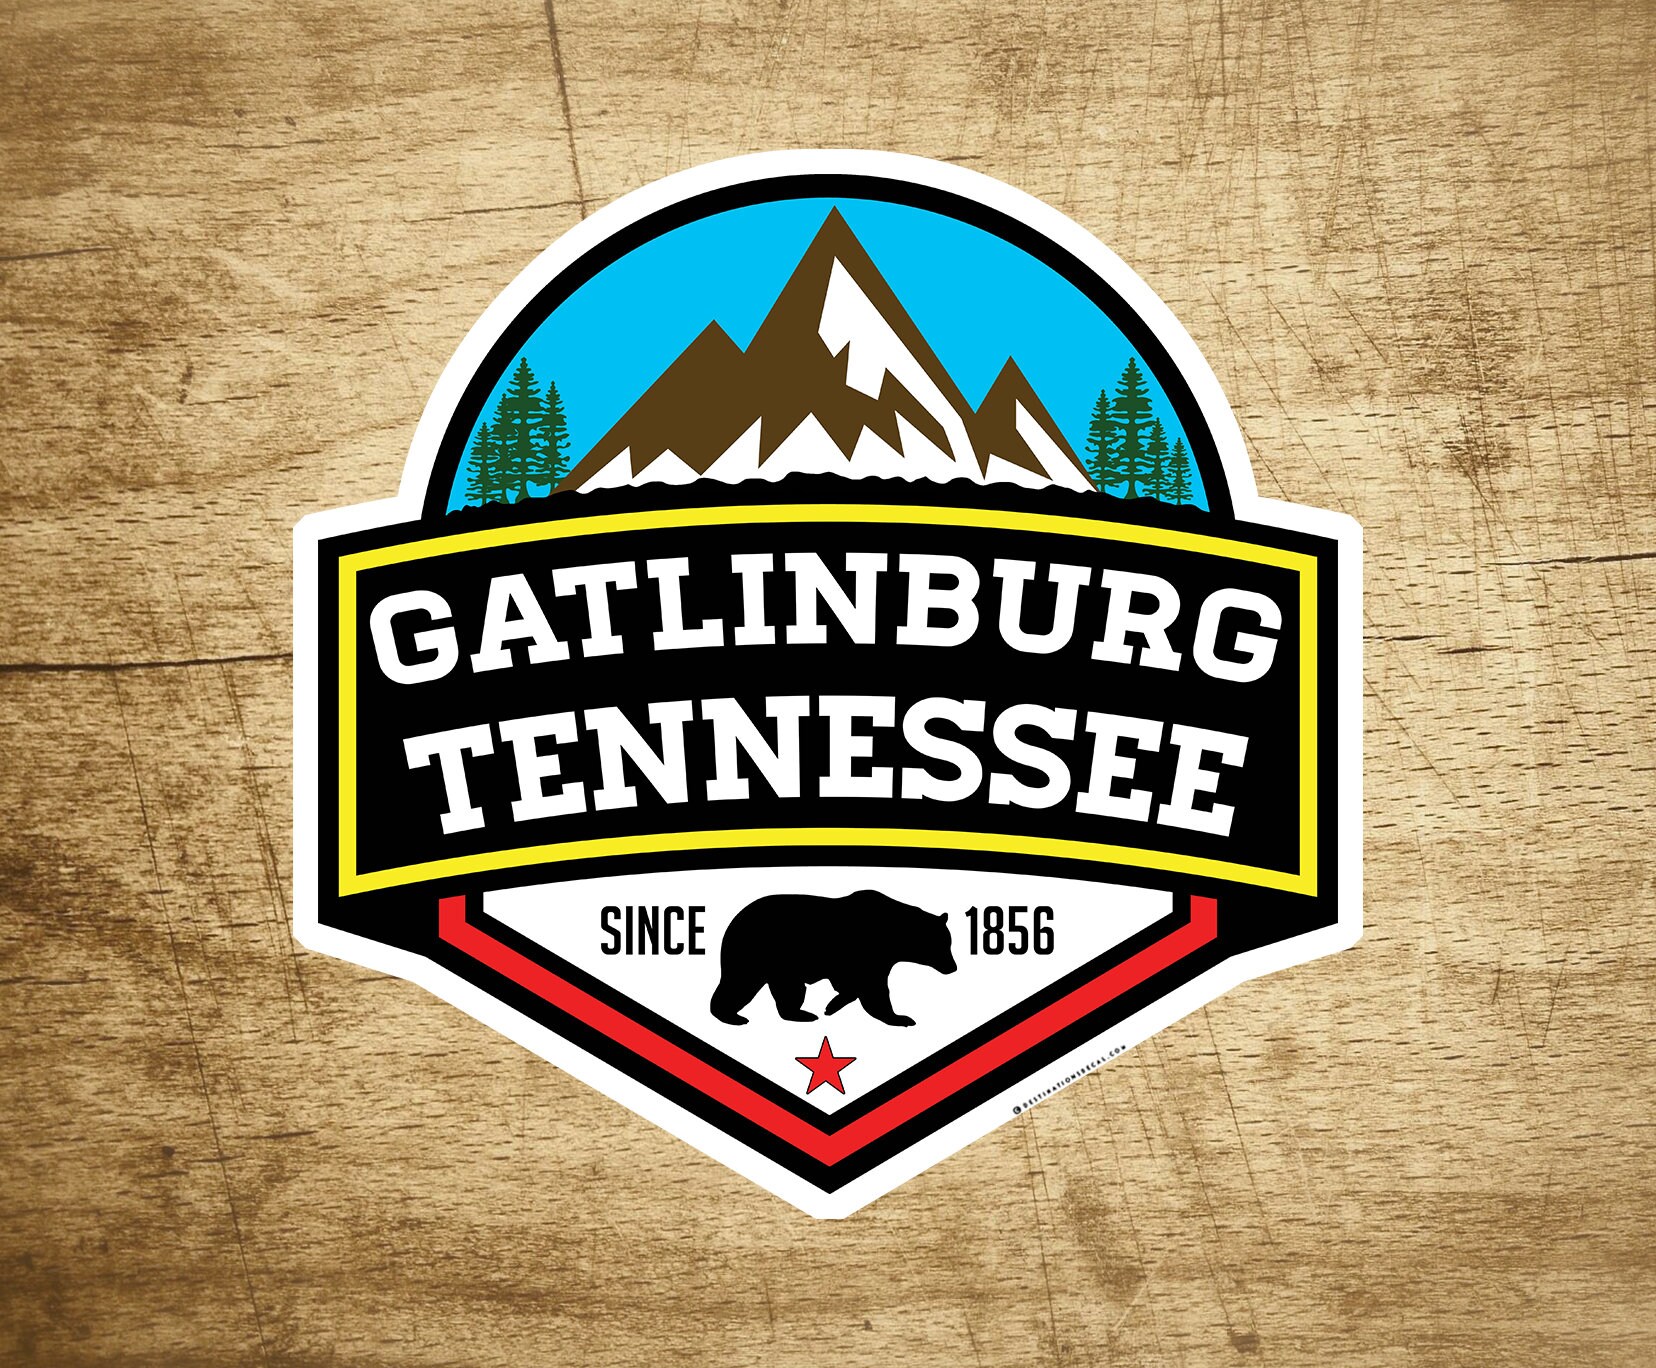 Gatlinburg Tennessee Decal Sticker 3 Great Smoky image